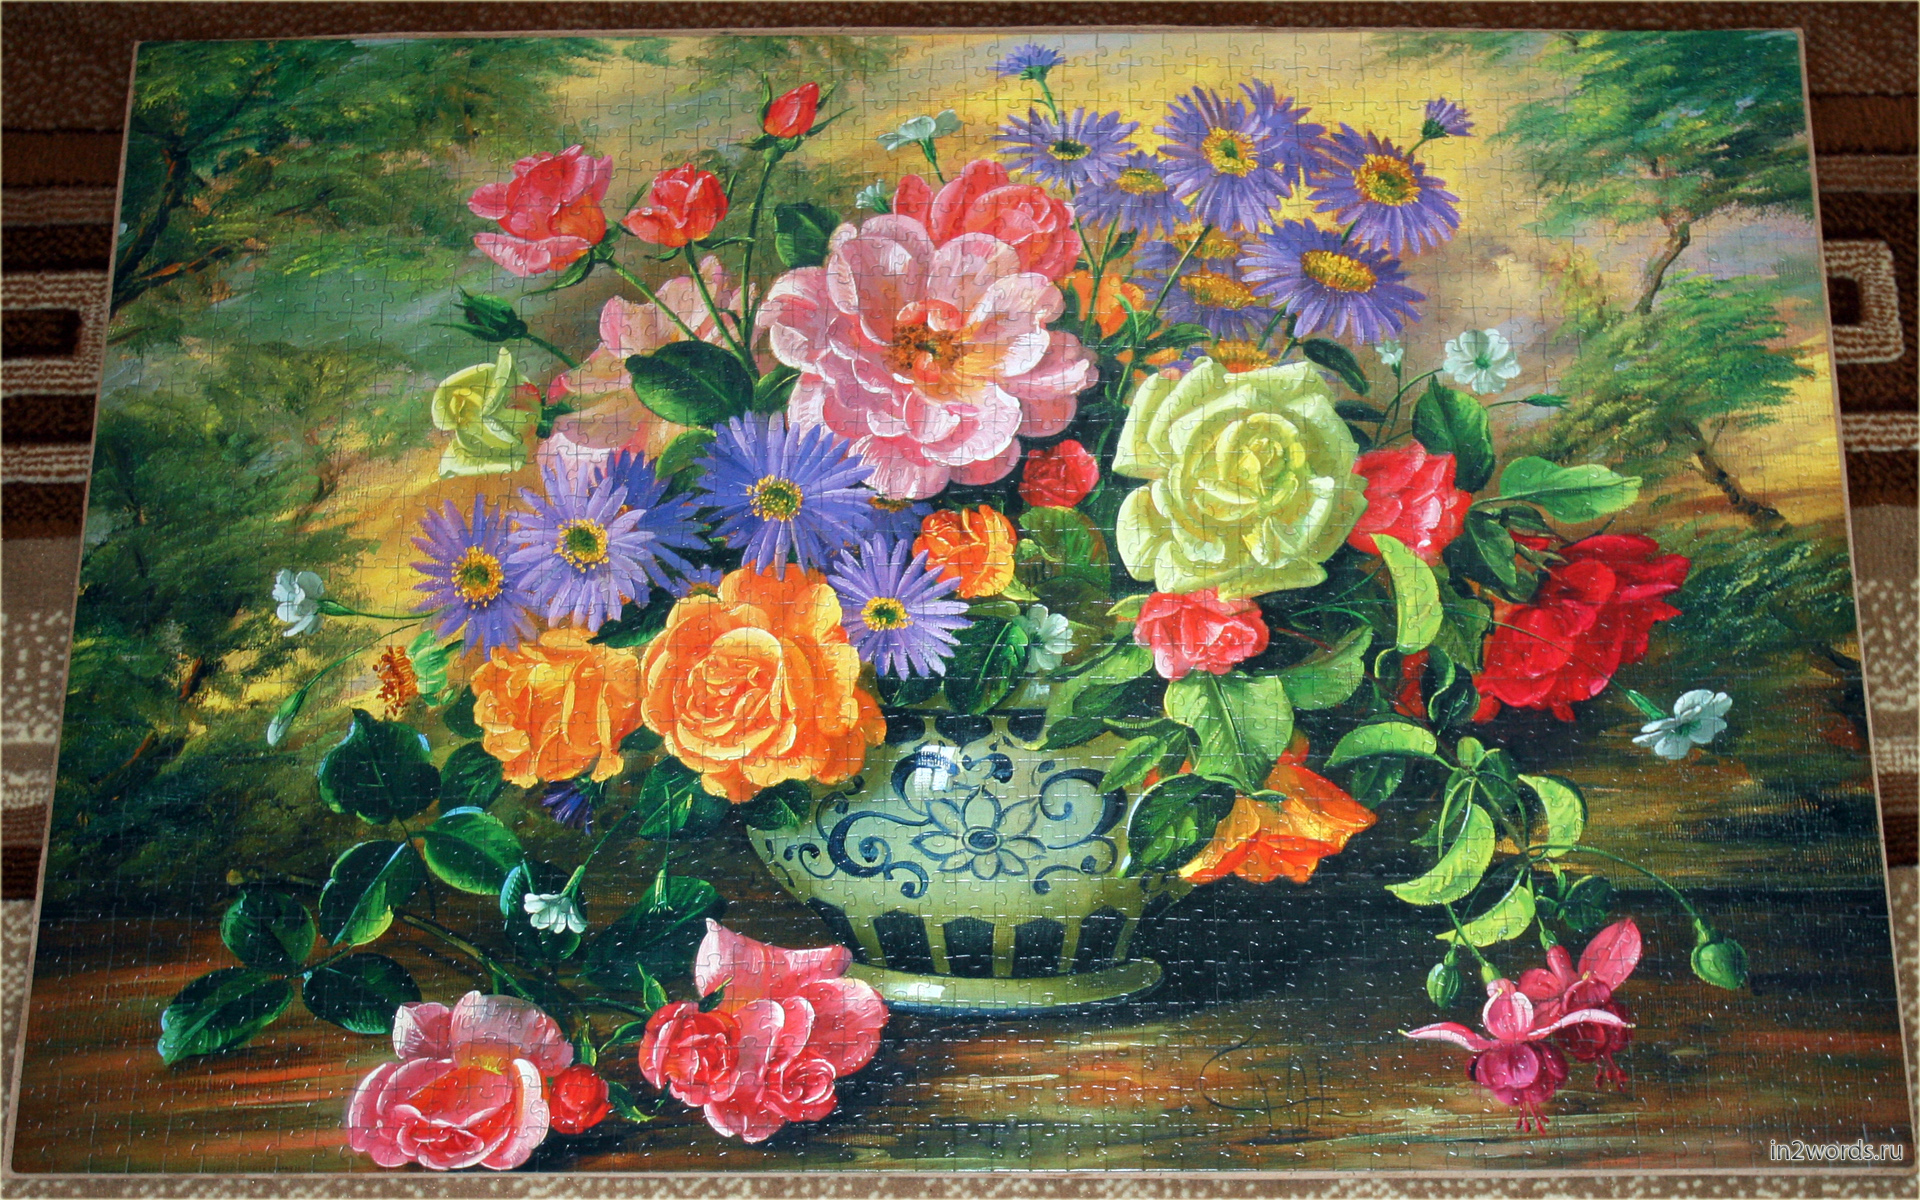 "Цветы в вазе" - пазл, 1500 элементов